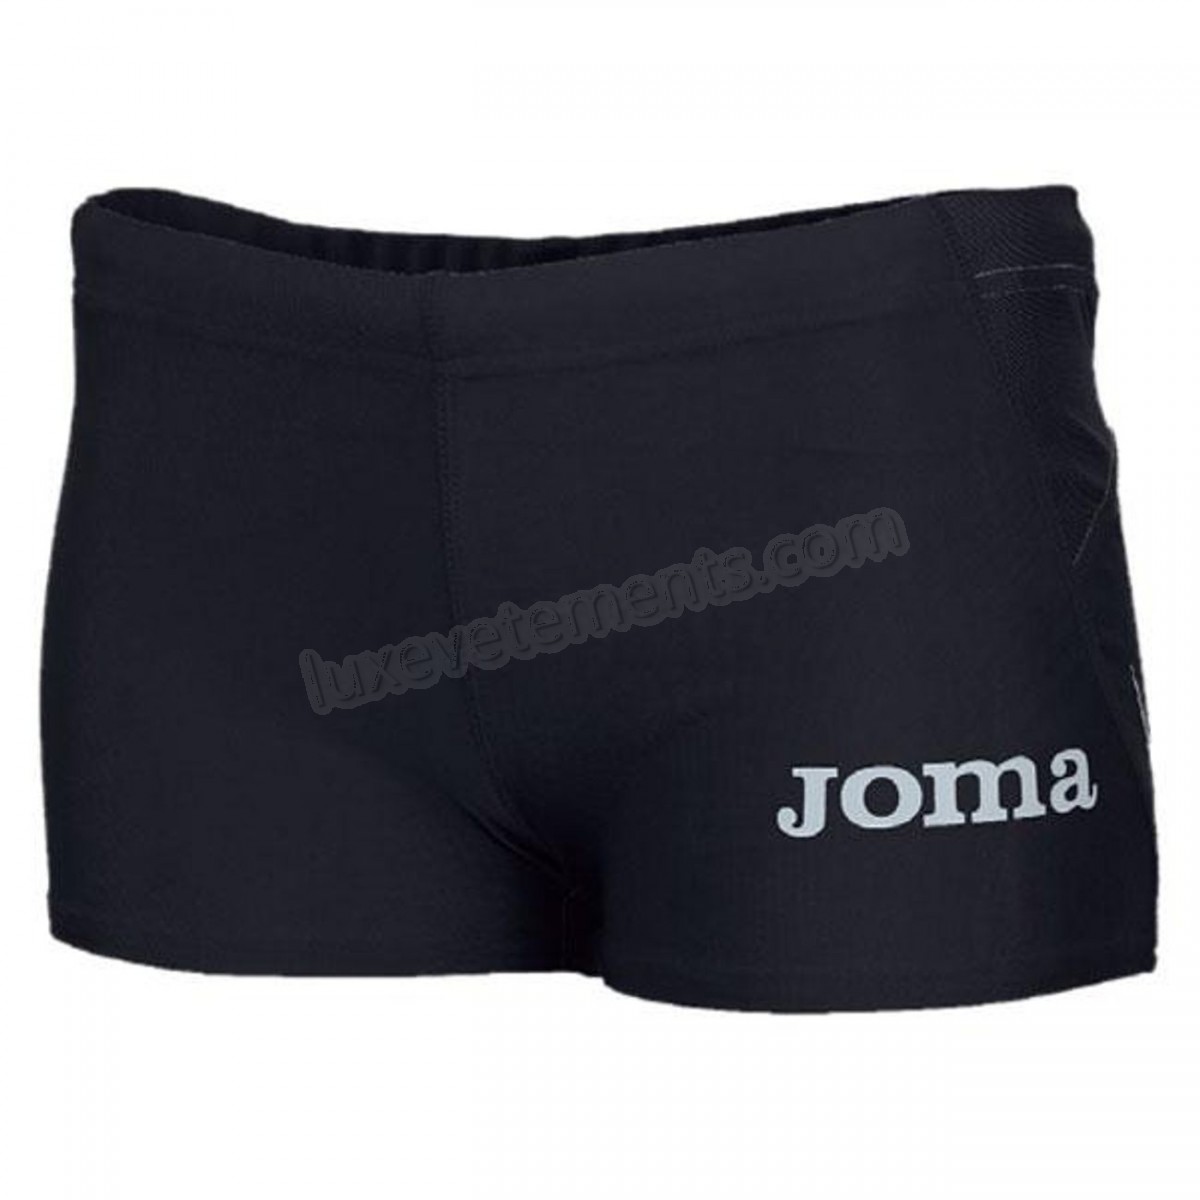 Joma-running femme JOMA Joma Elite Ii Shorts Vente en ligne - -0